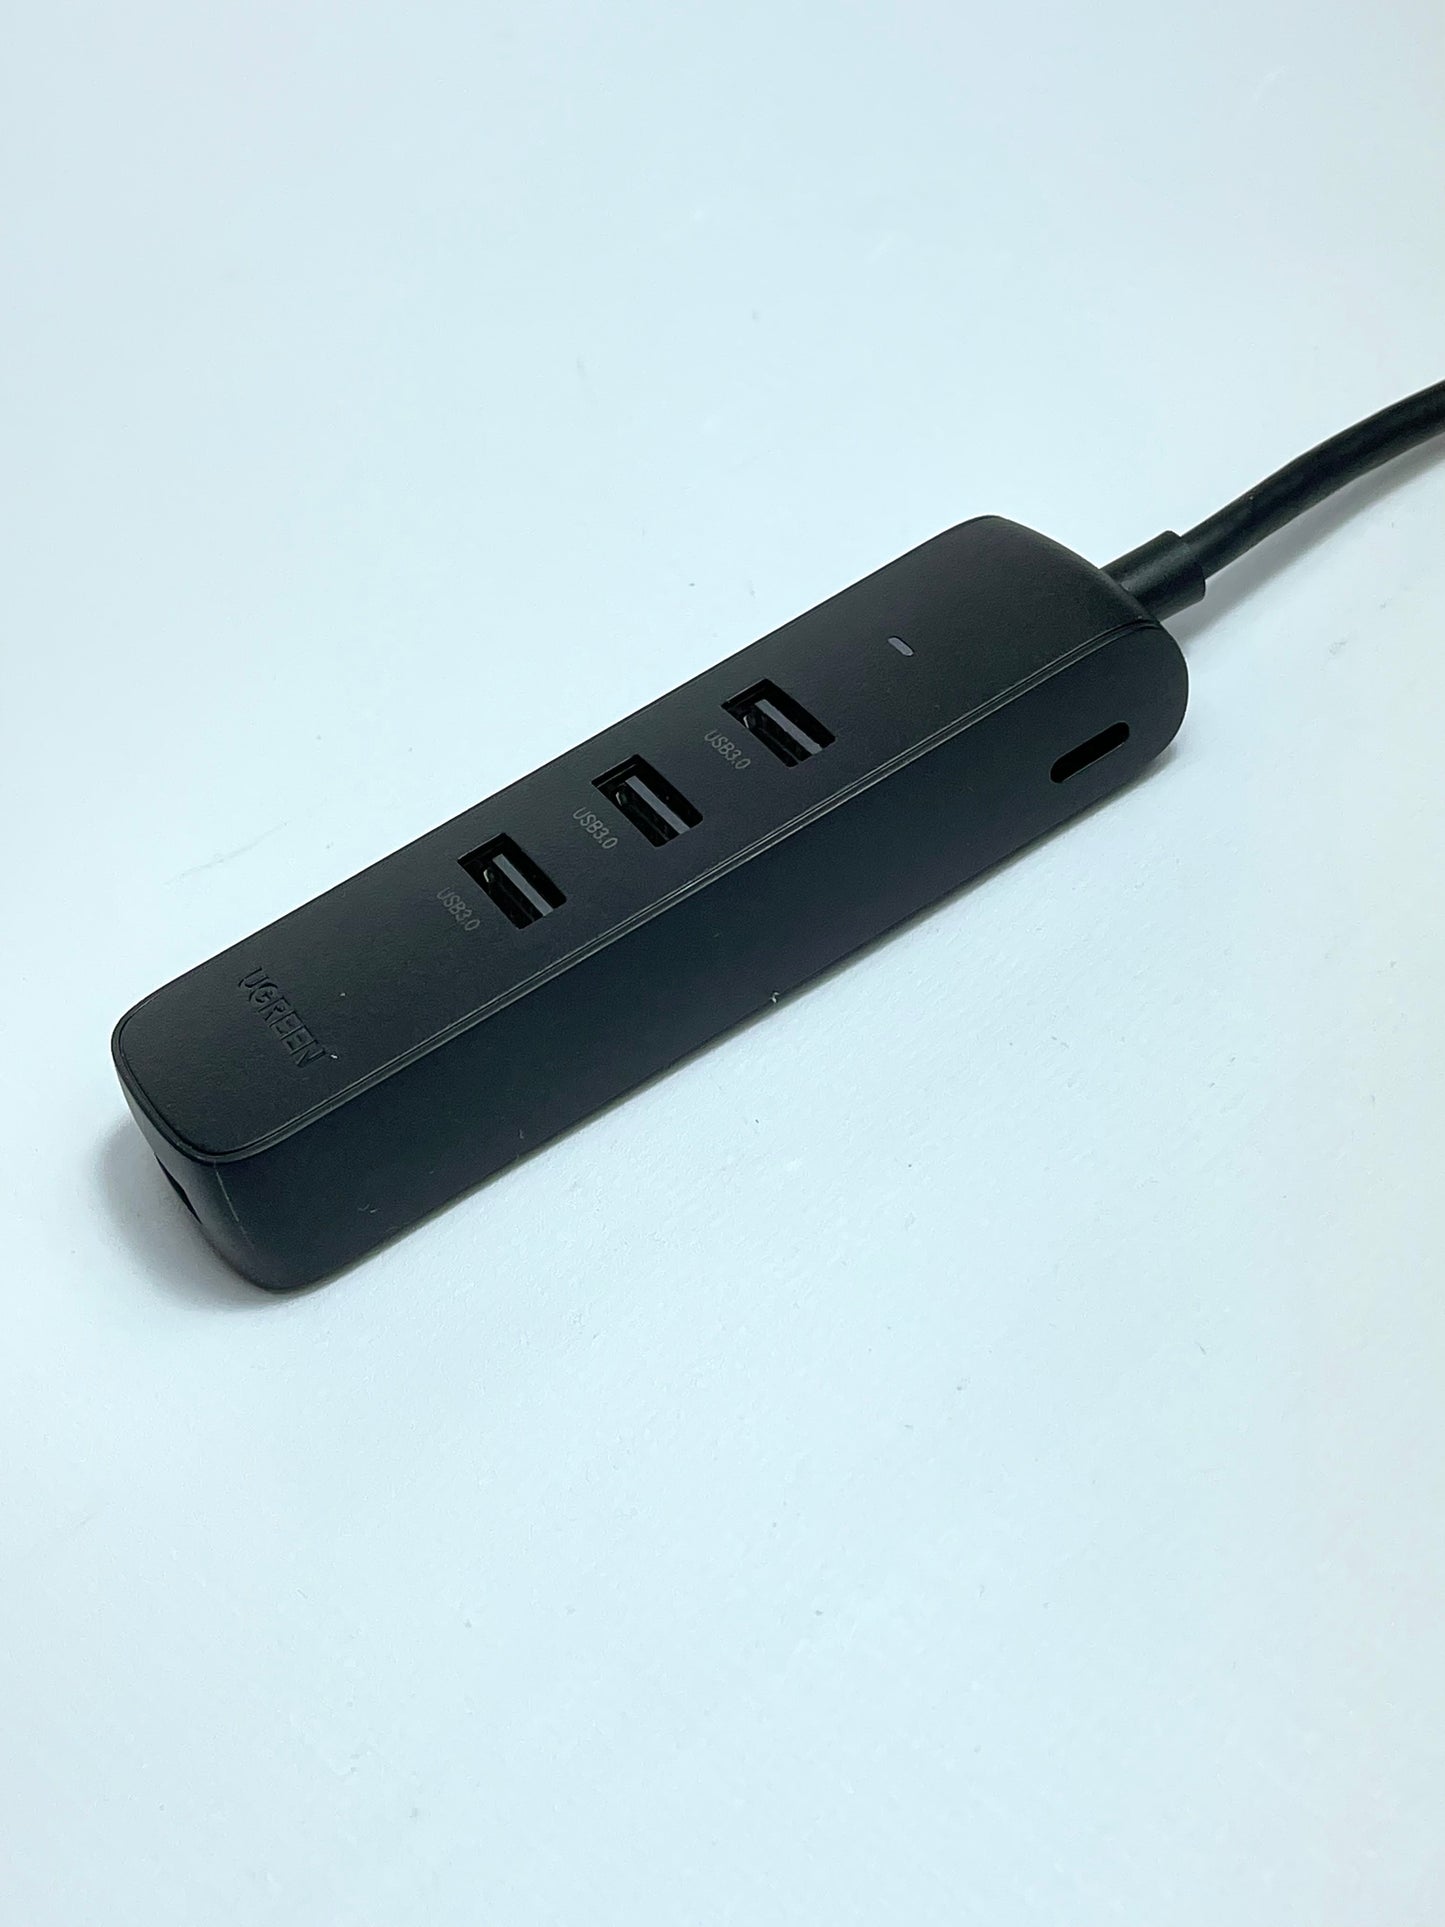 Ugreen 4 Ports Powered USB 3.0 Hub USB C Port 1m